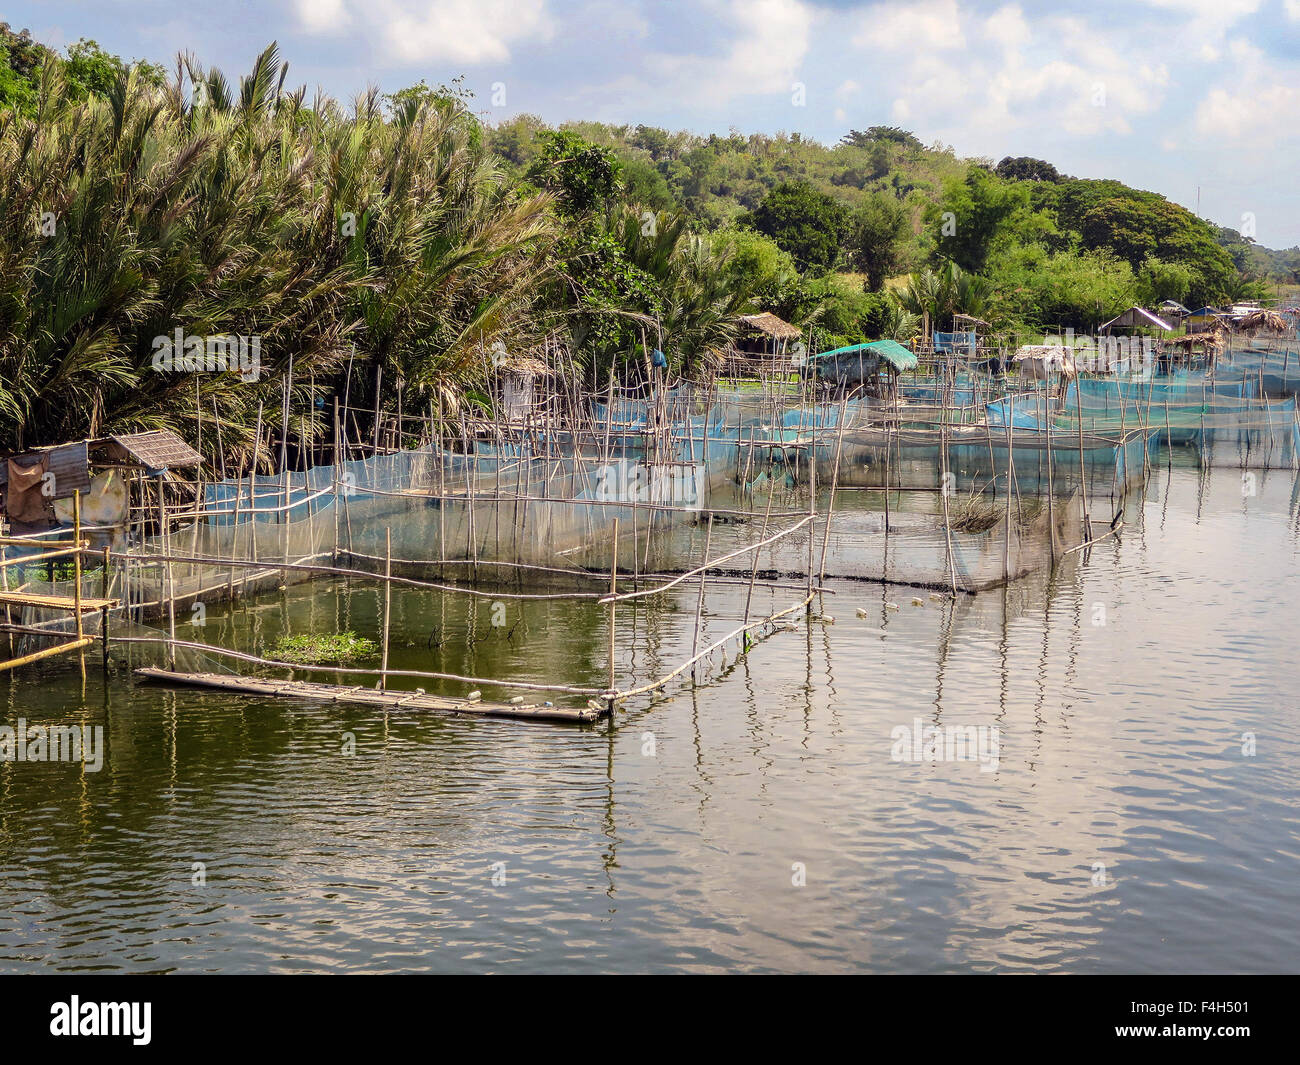 Giant river prawns, Macrobrachium rosenbergii, are raised in net pens on a freshwater river in Luzon Island, Philippines. Stock Photo